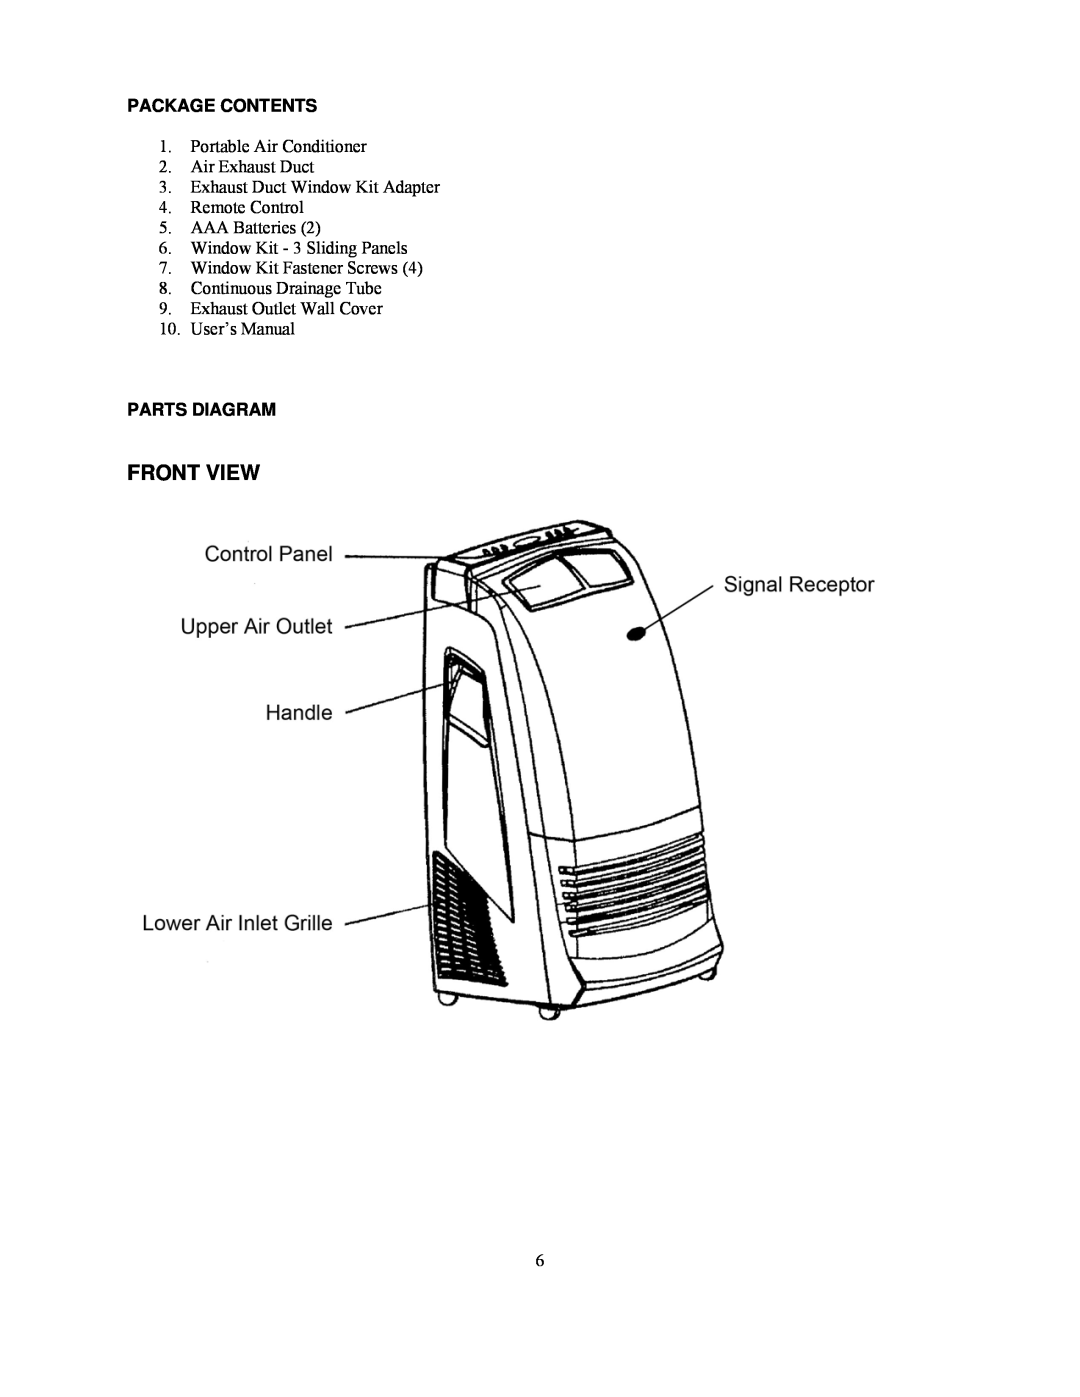 Soleus Air KY-32E owner manual Front View, Package Contents, Parts Diagram 